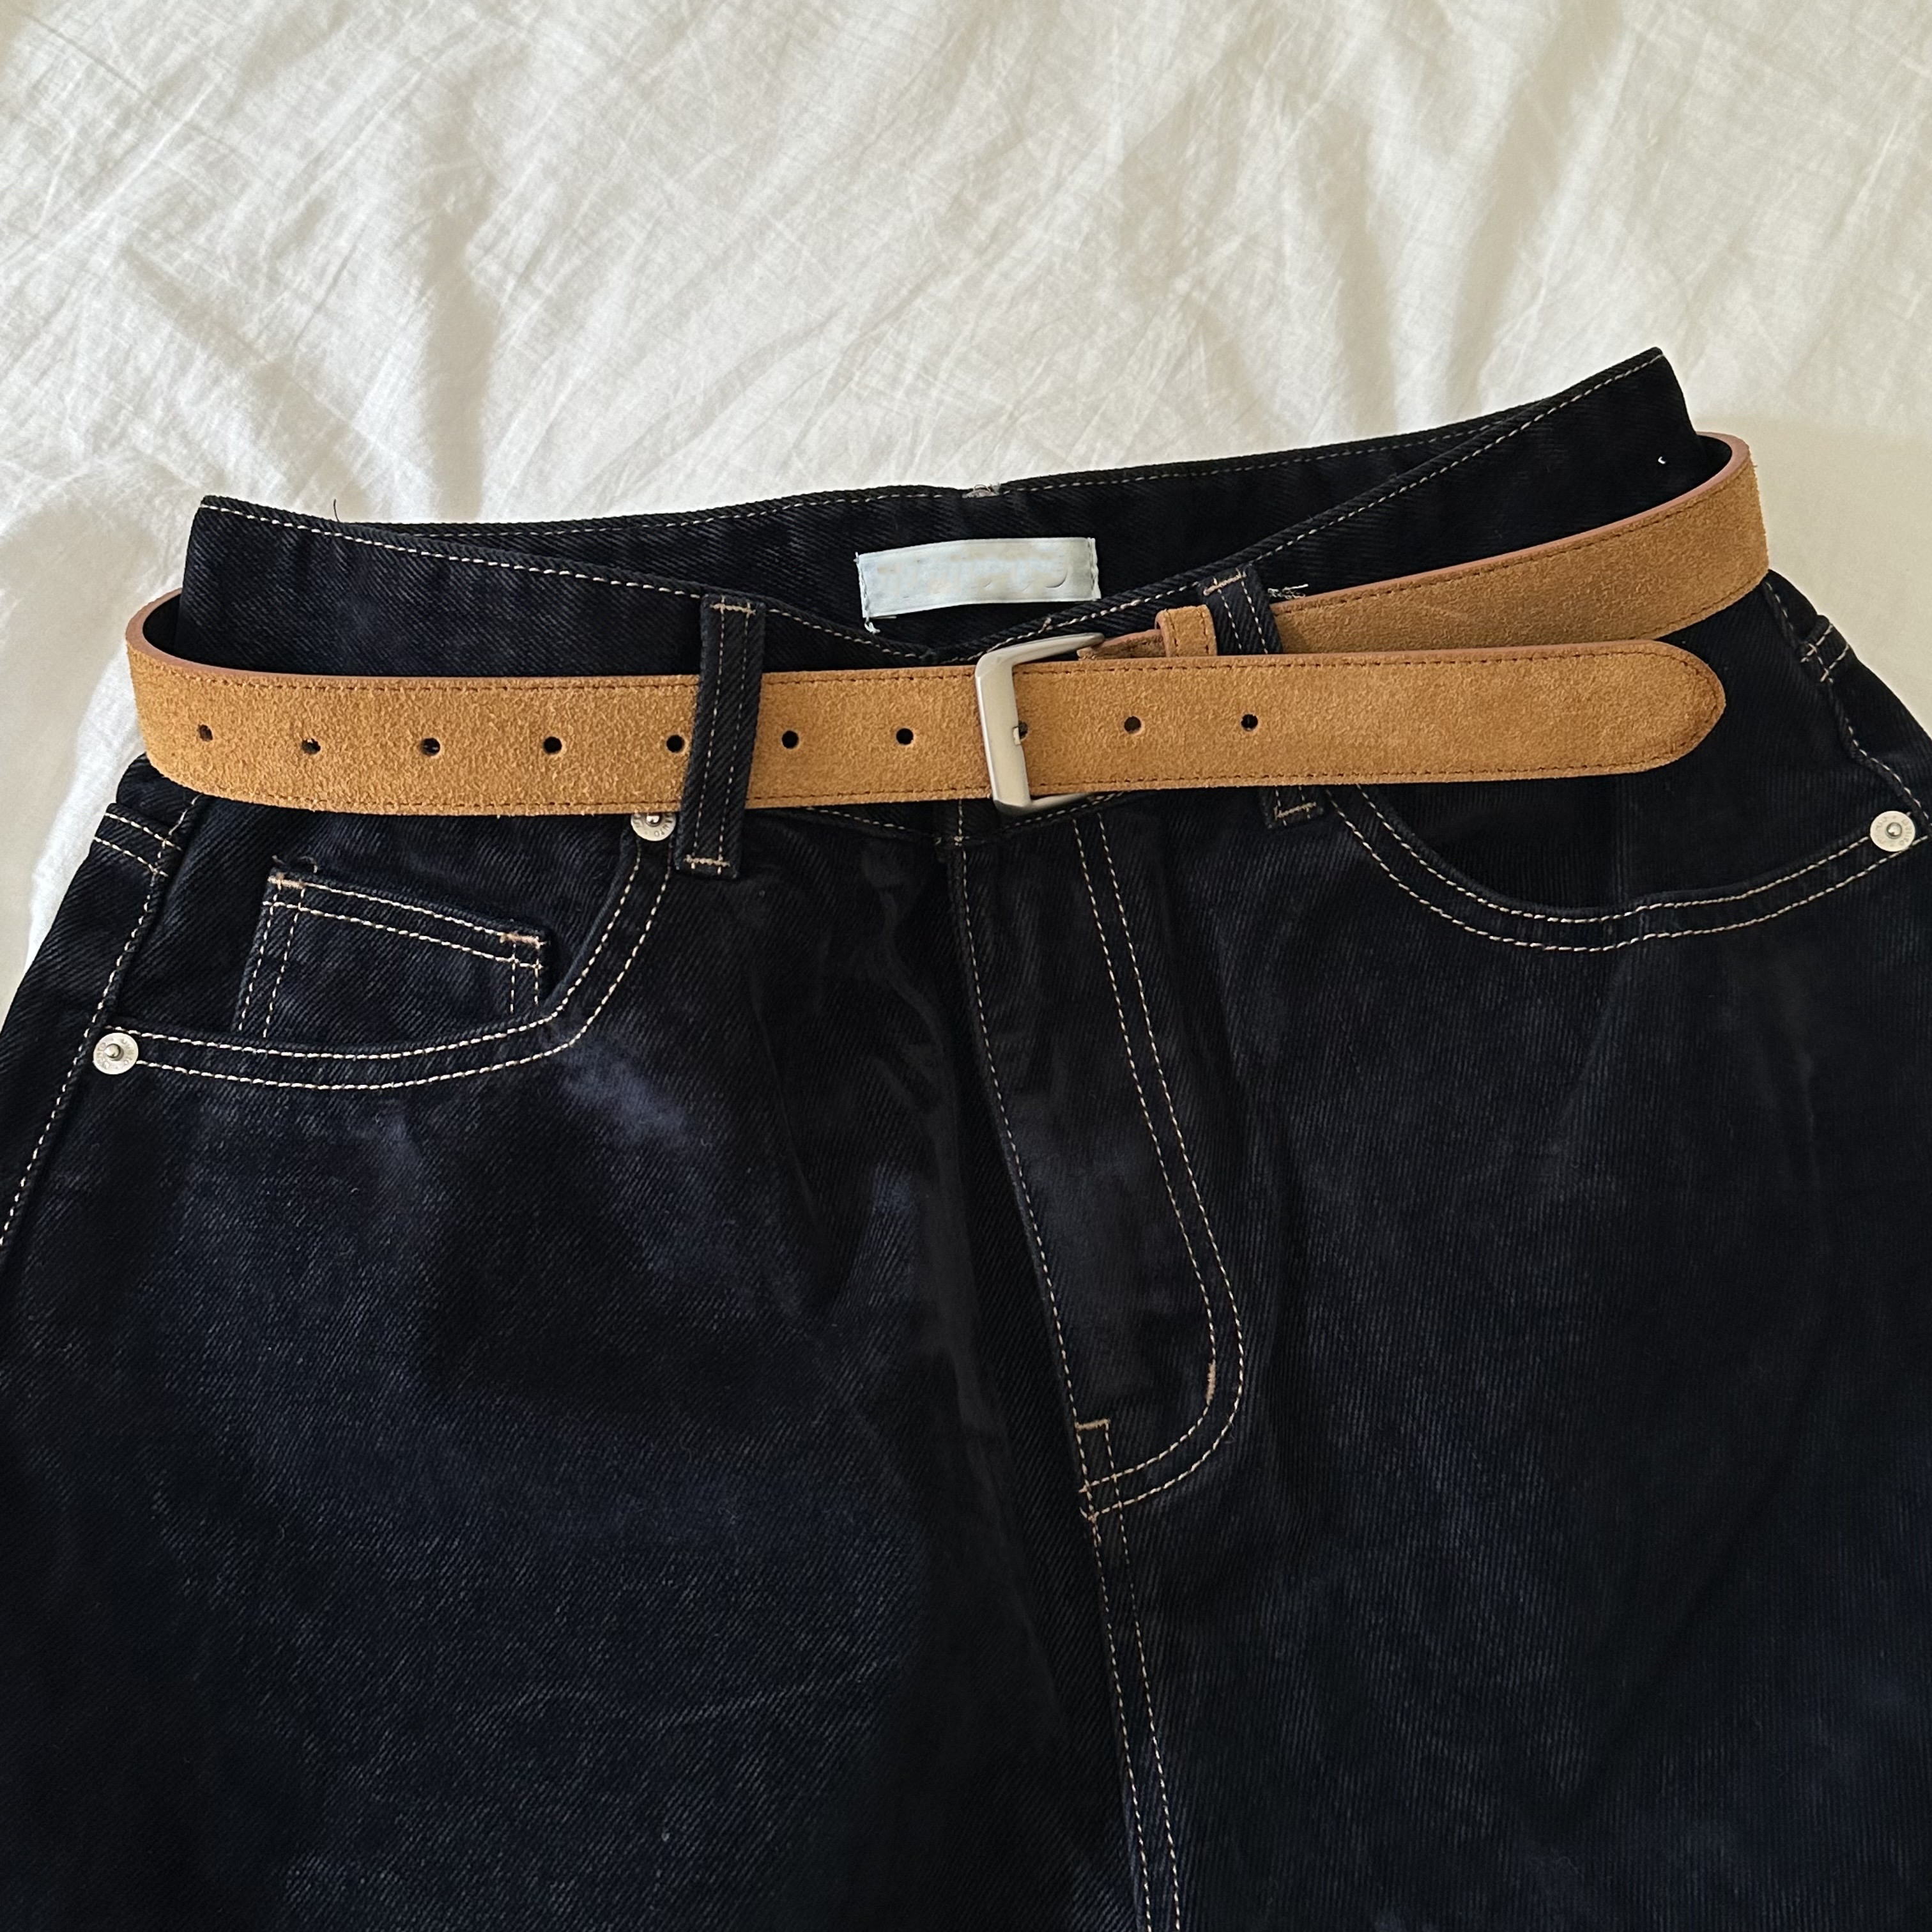 [Unisex] Suede volume leather belt(4color)